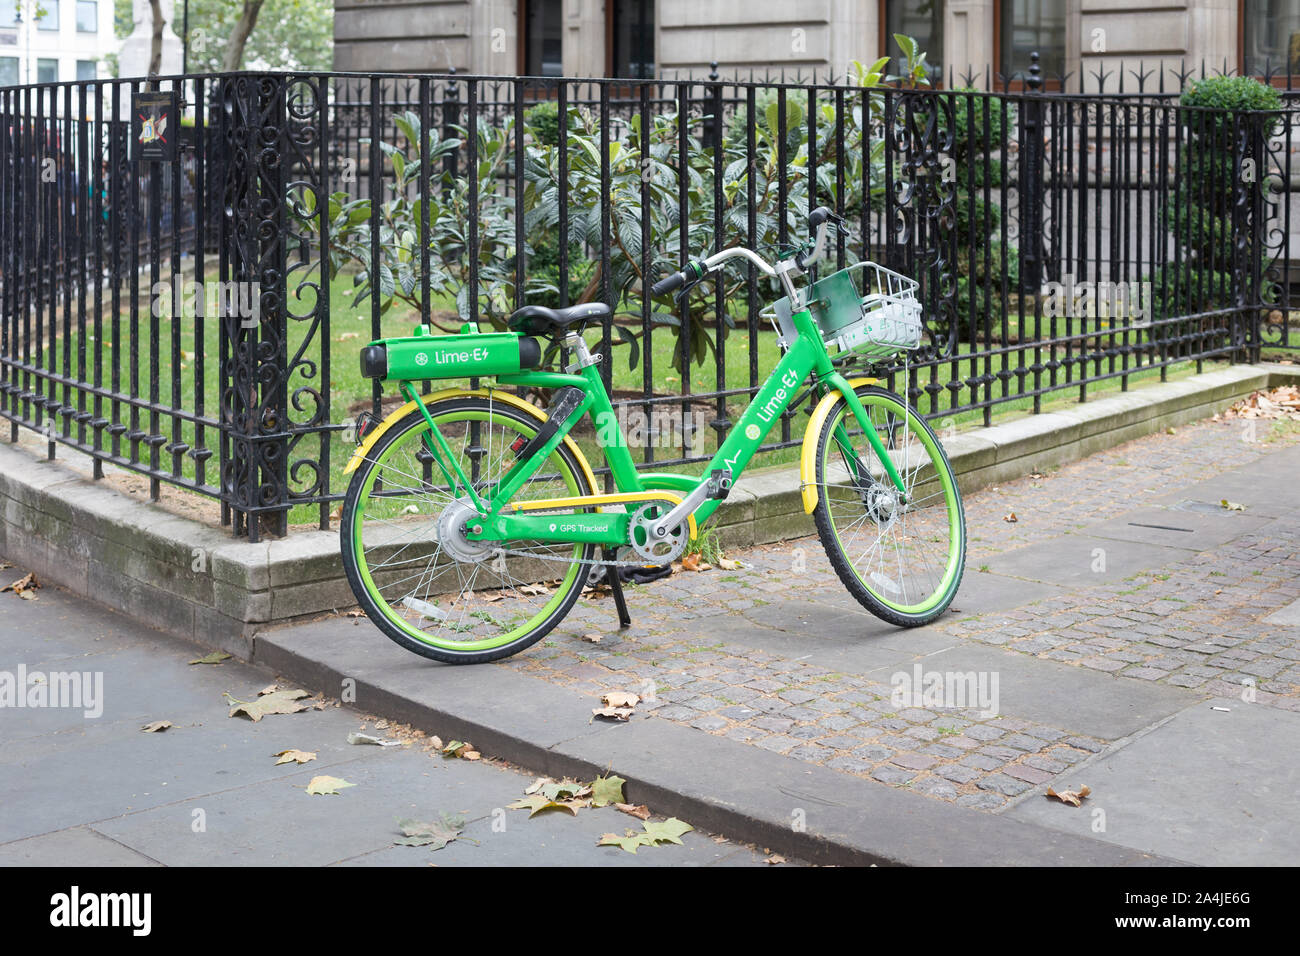 Kalk - E Elektrische unterstützen Bike, London, UK Stockfoto